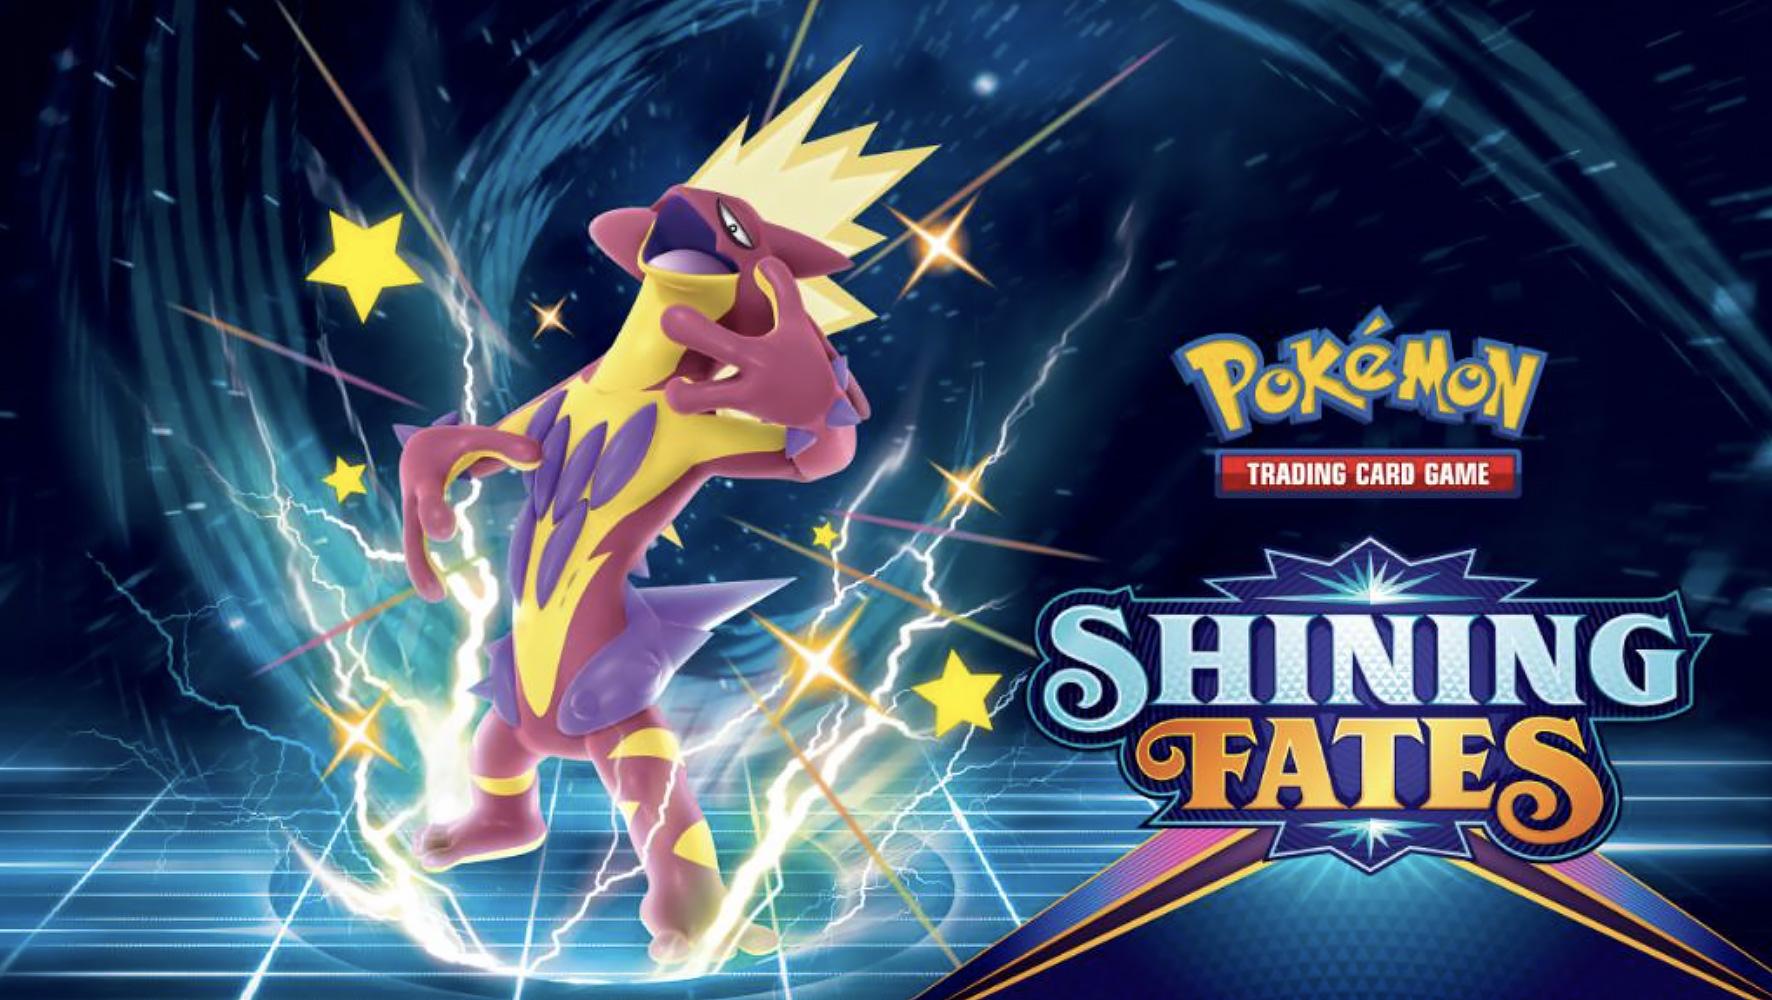 Shiny Rayquaza Promo Giveaway at Pokemon Centers 